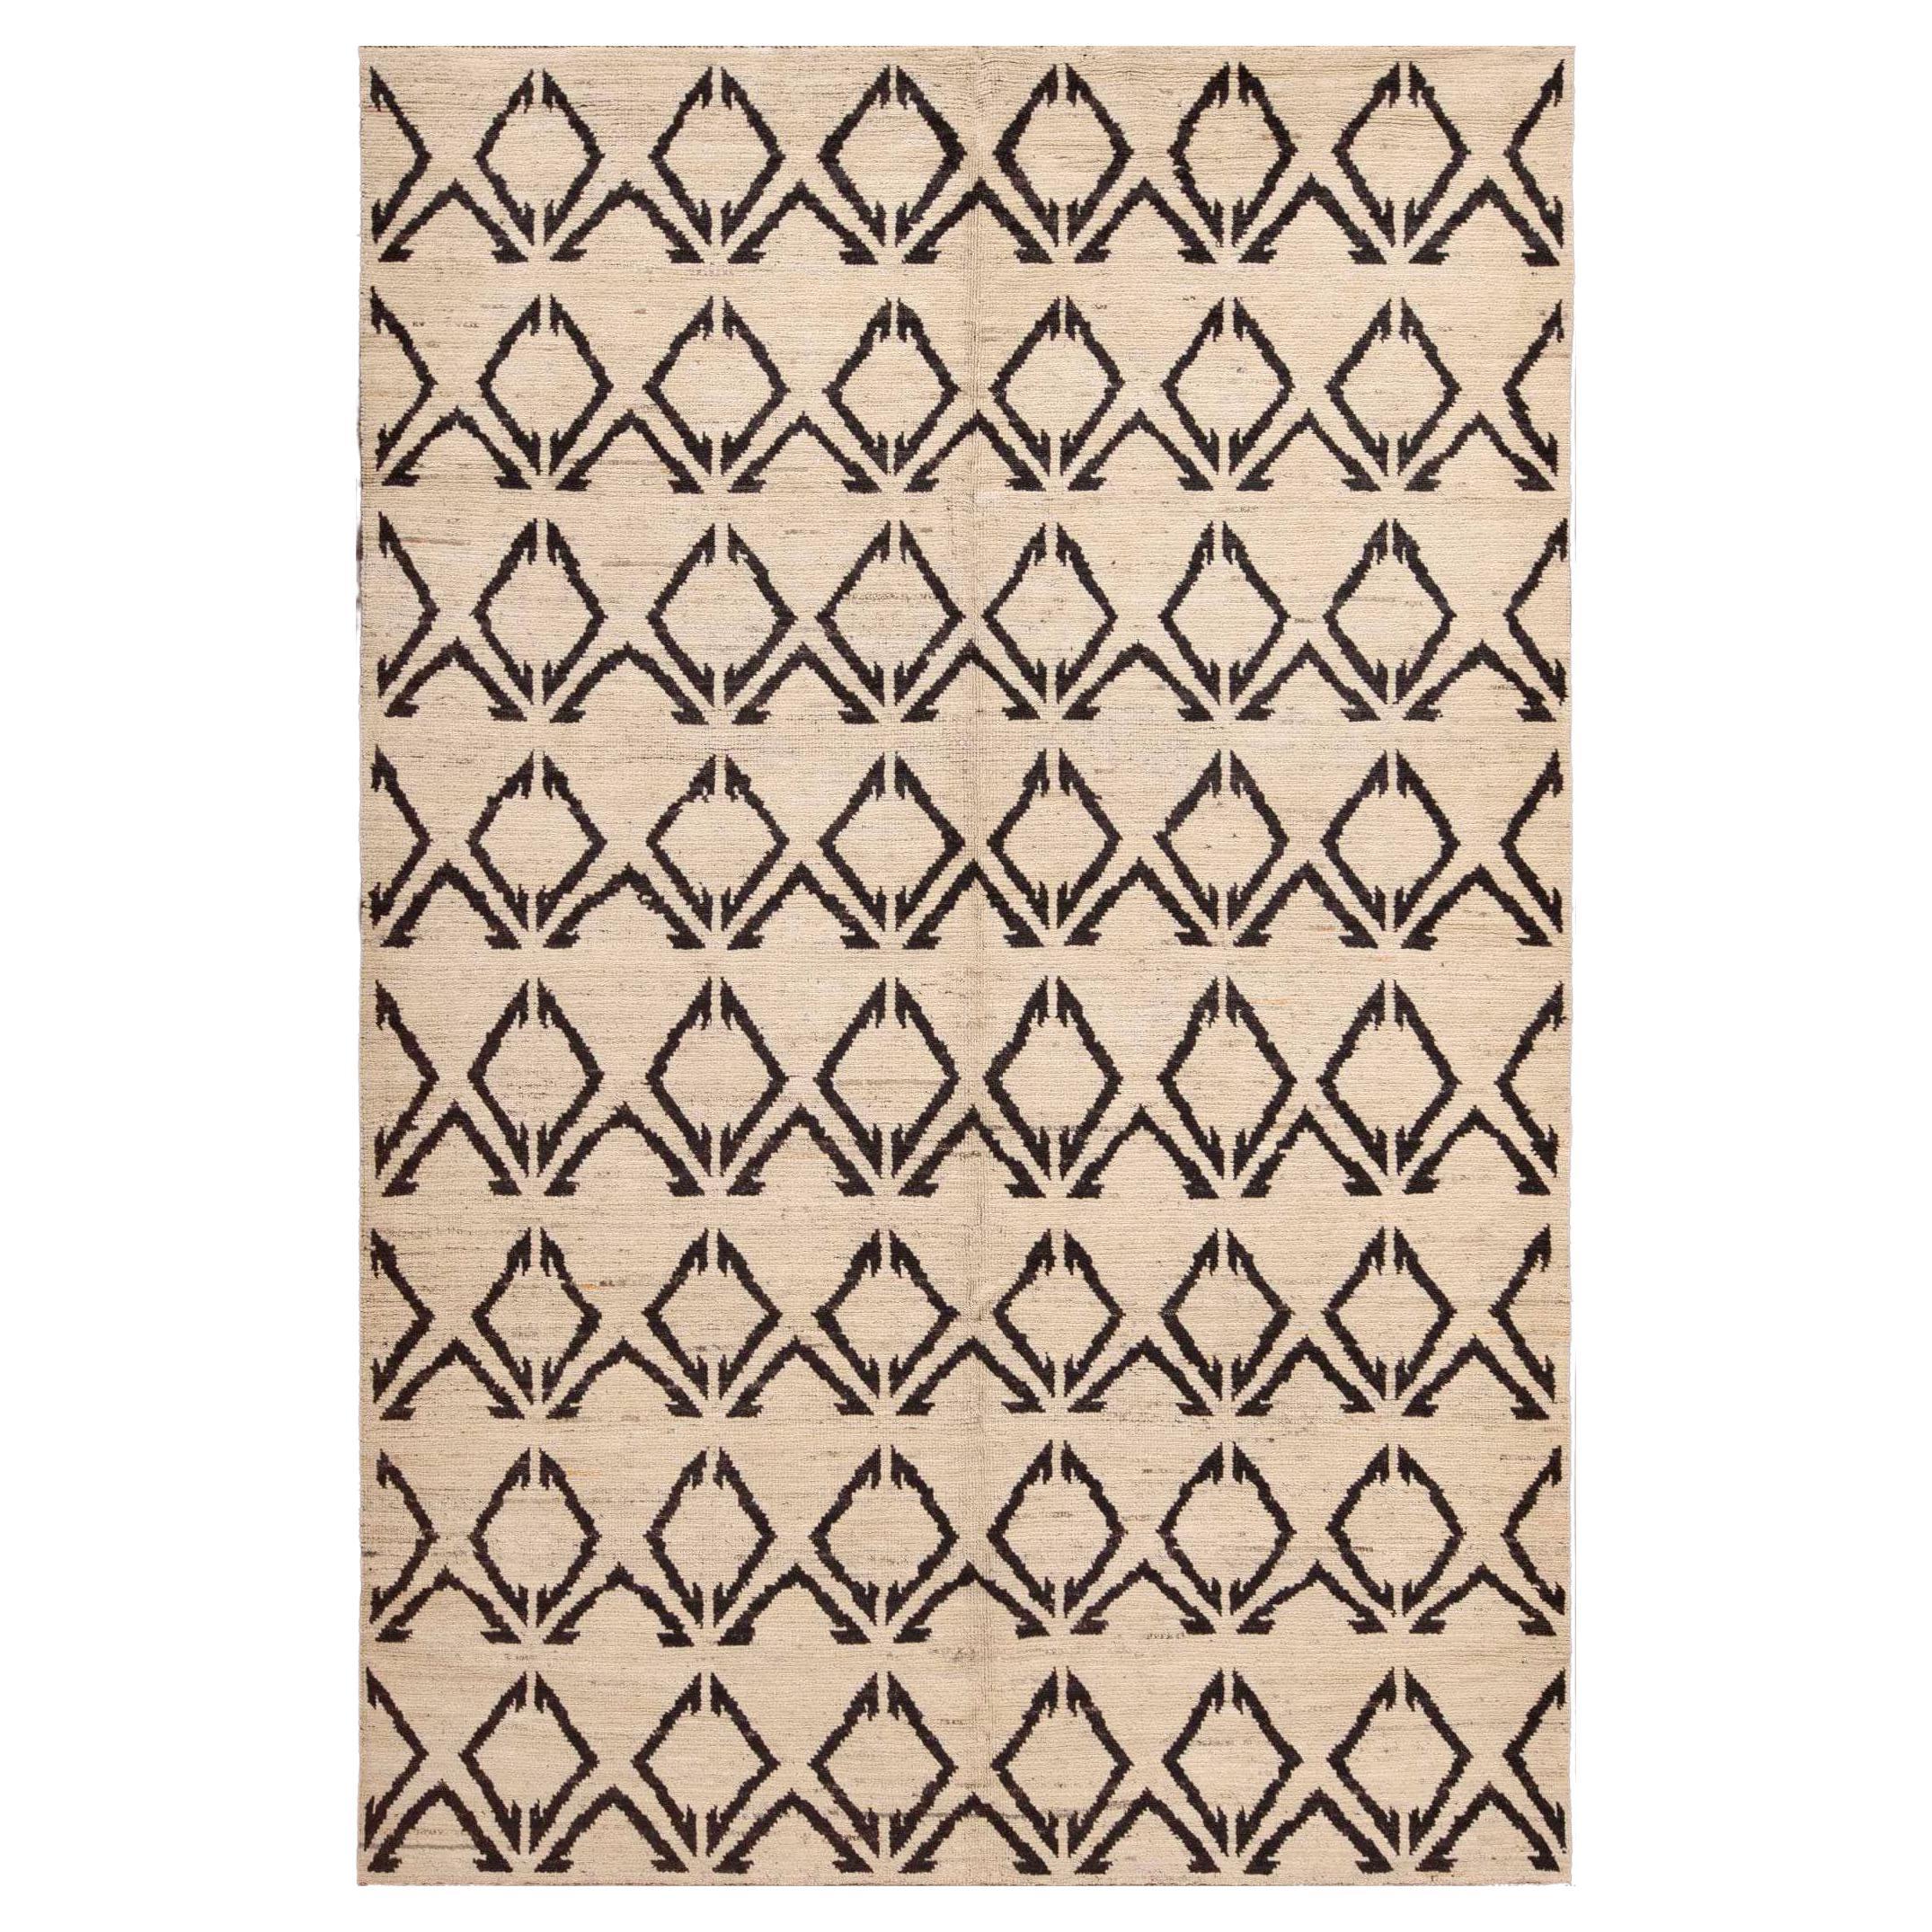 Nazmiyal Collection Bold Charcoal Tribal Geometric Modern Area Rug 6'4" x 9'5"